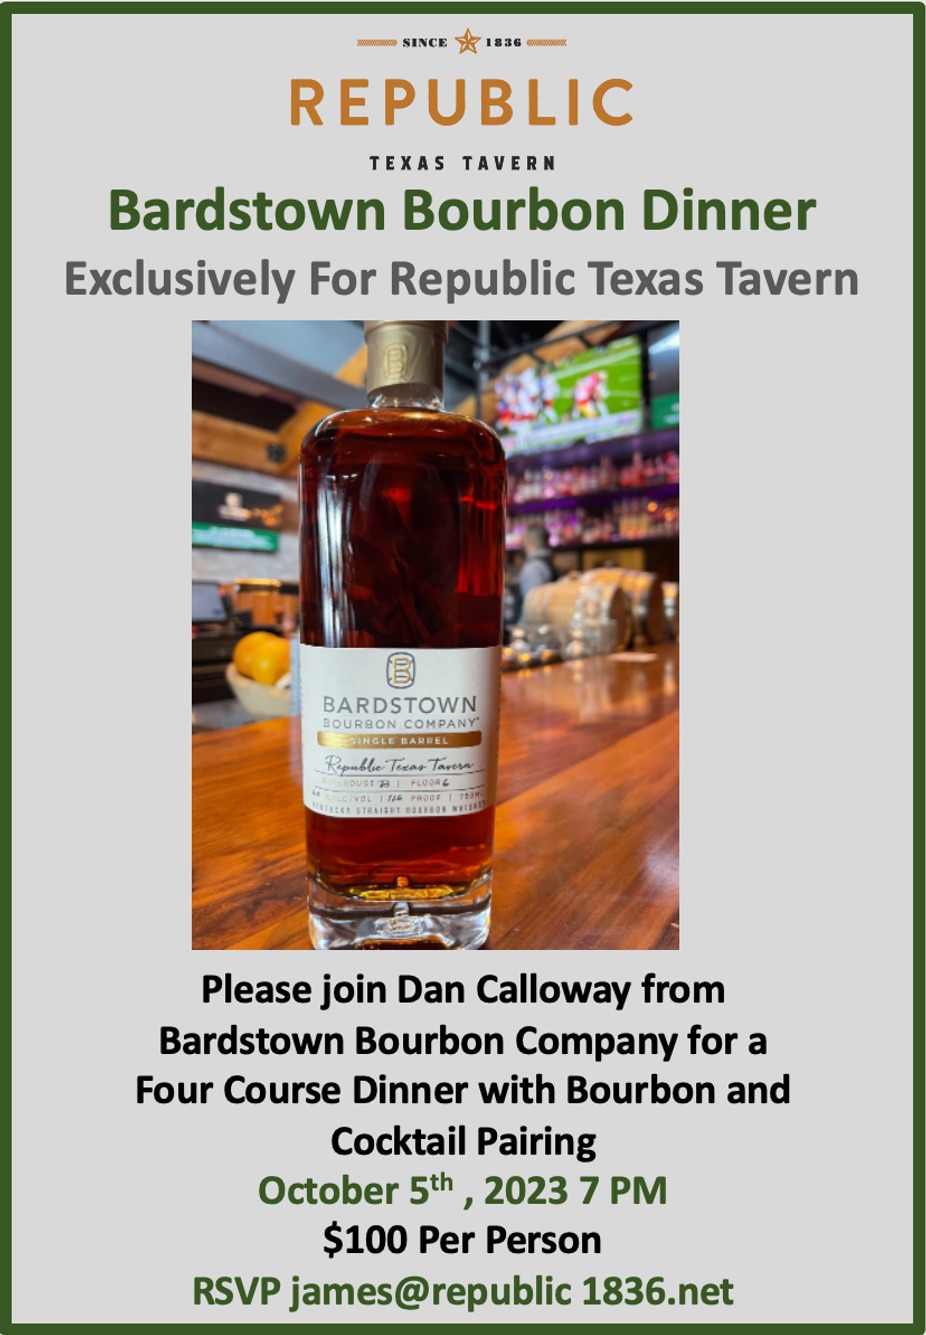 Bardstown Bourbon Dinner event photo